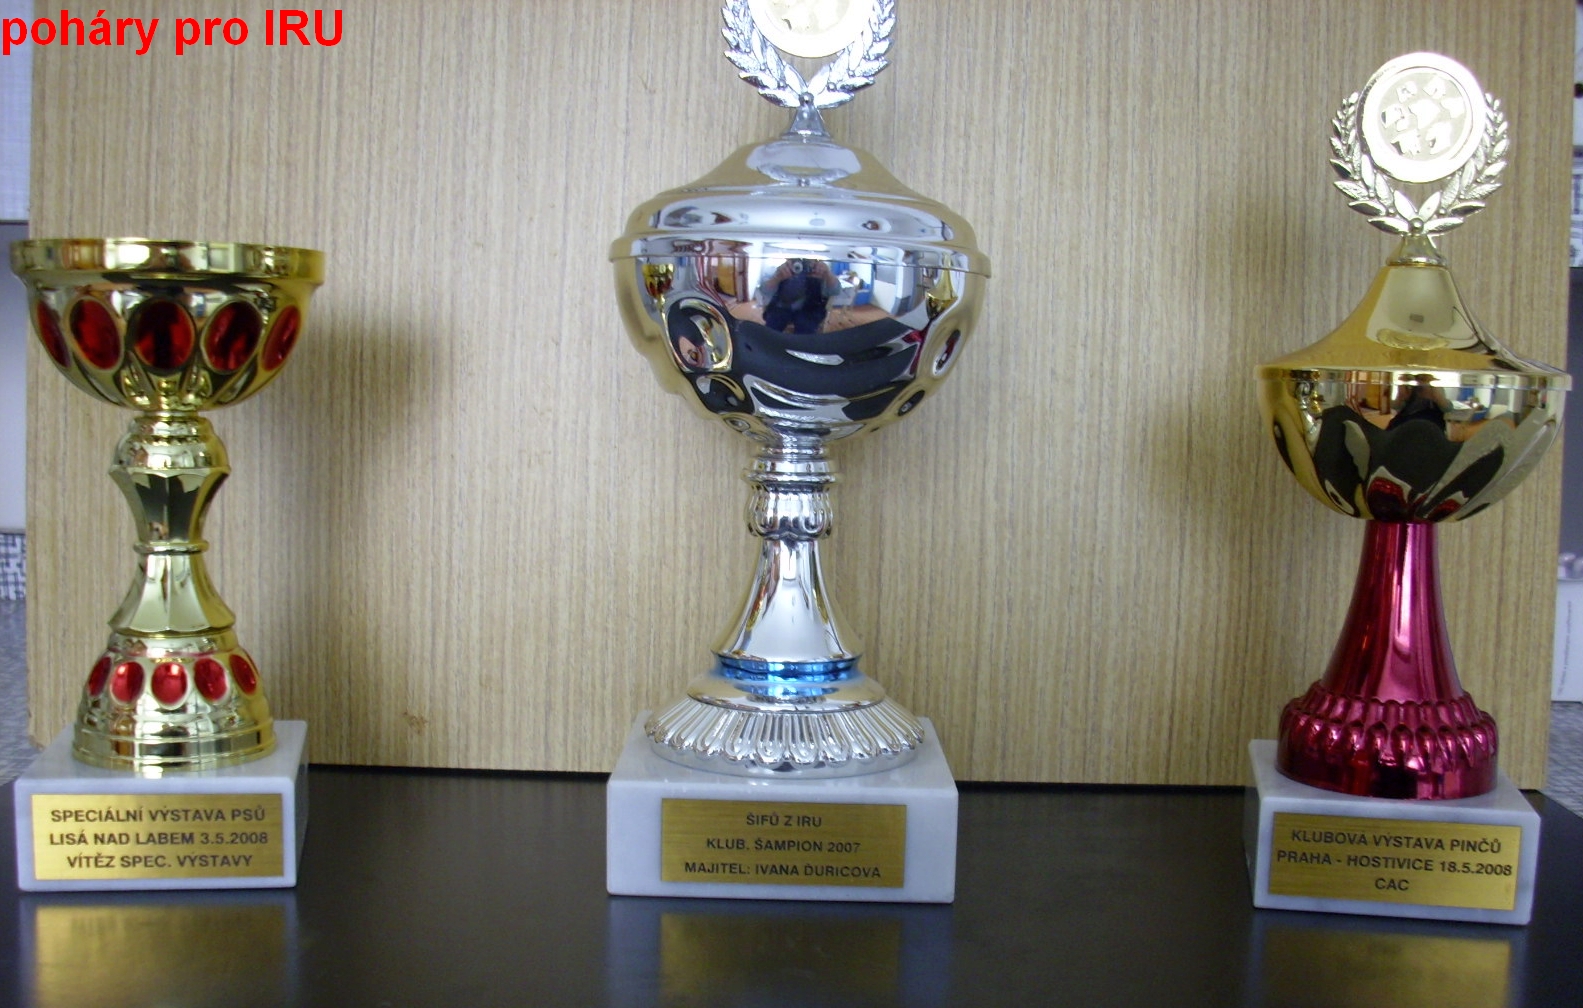 (36) 18.5.2008 Šífů z IRU Klubový šampion,Šarí z IRU V1,CAC,Klubová výstava  Praha,Vanilka z IRU V1,CAC,Vítěz spec.výstavy